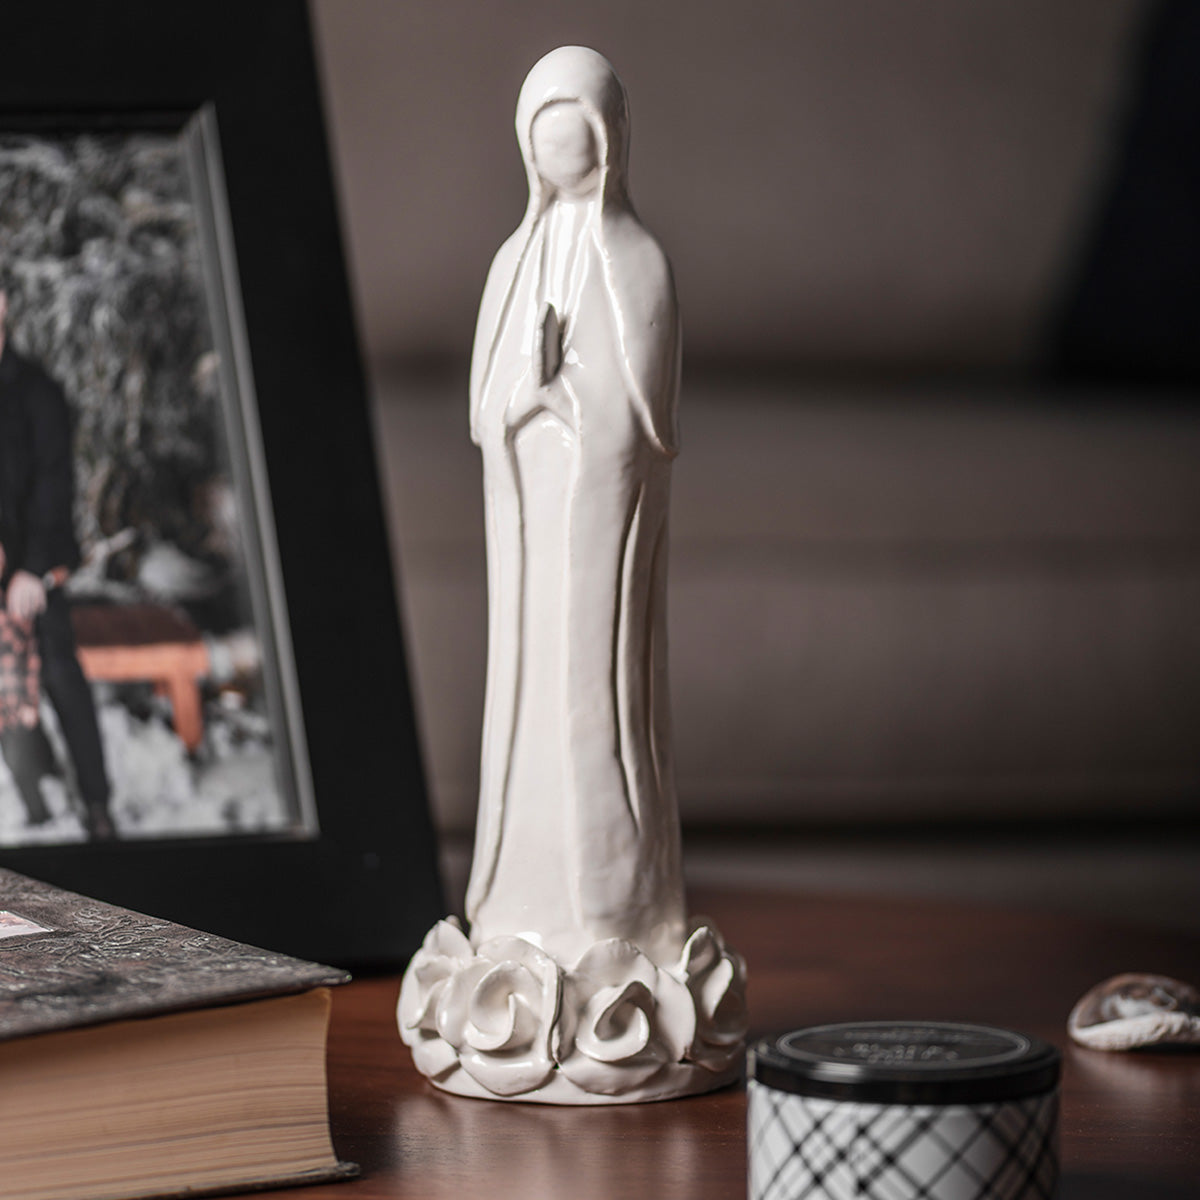 Virgin Mary figure in ceramic